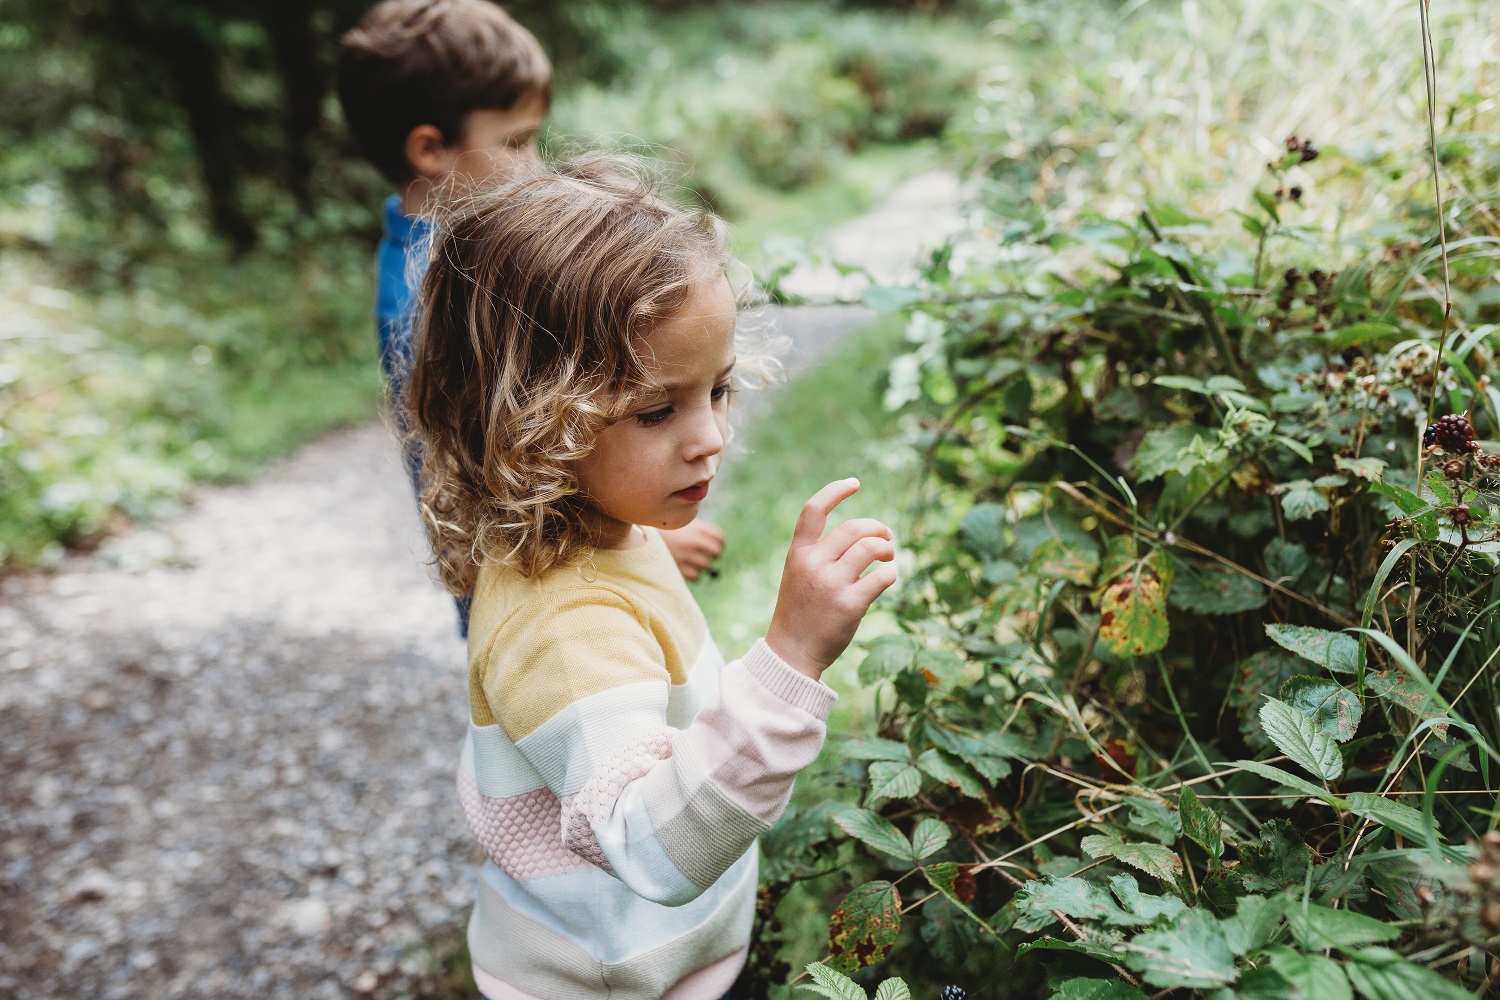 Children look at a blackberry bush